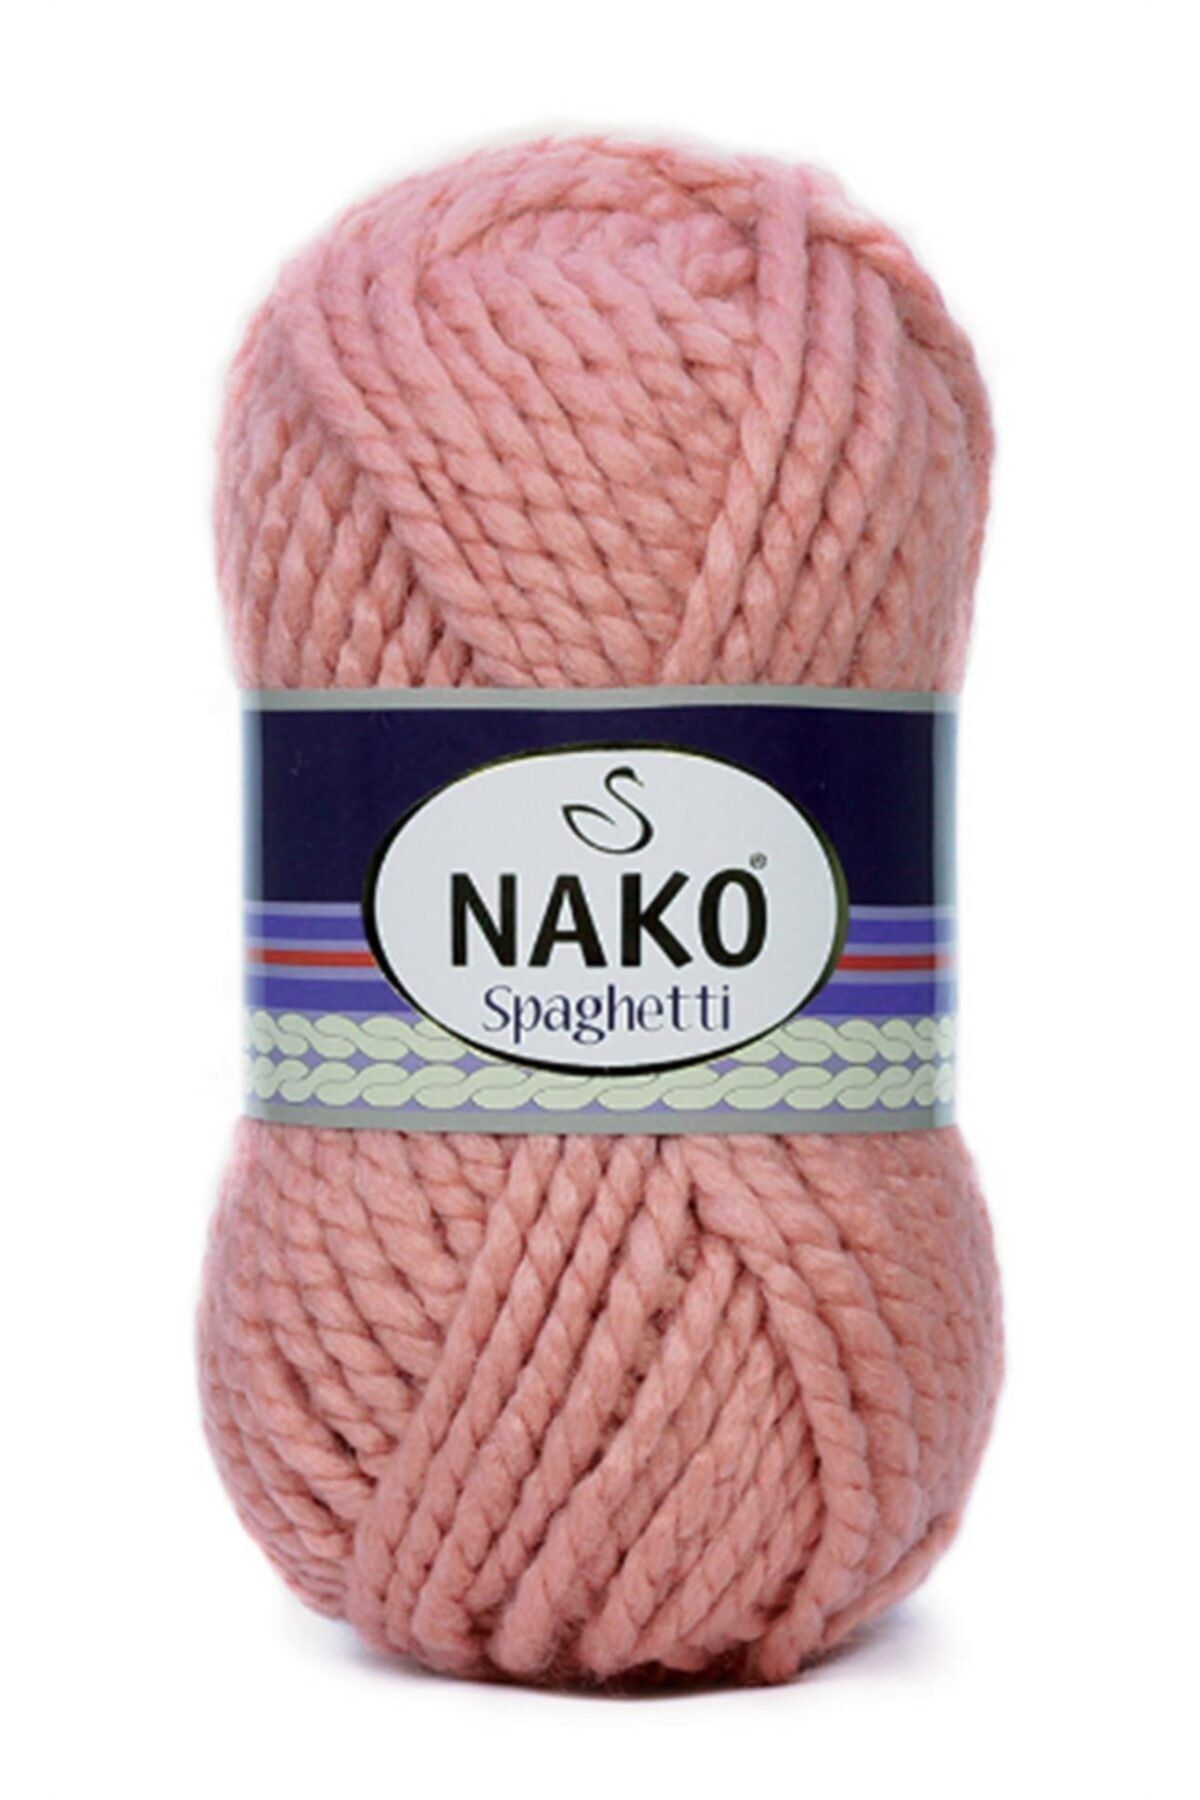 Nako Spaghetti 11613 Pudra | Kışlık Ipi Yünlü